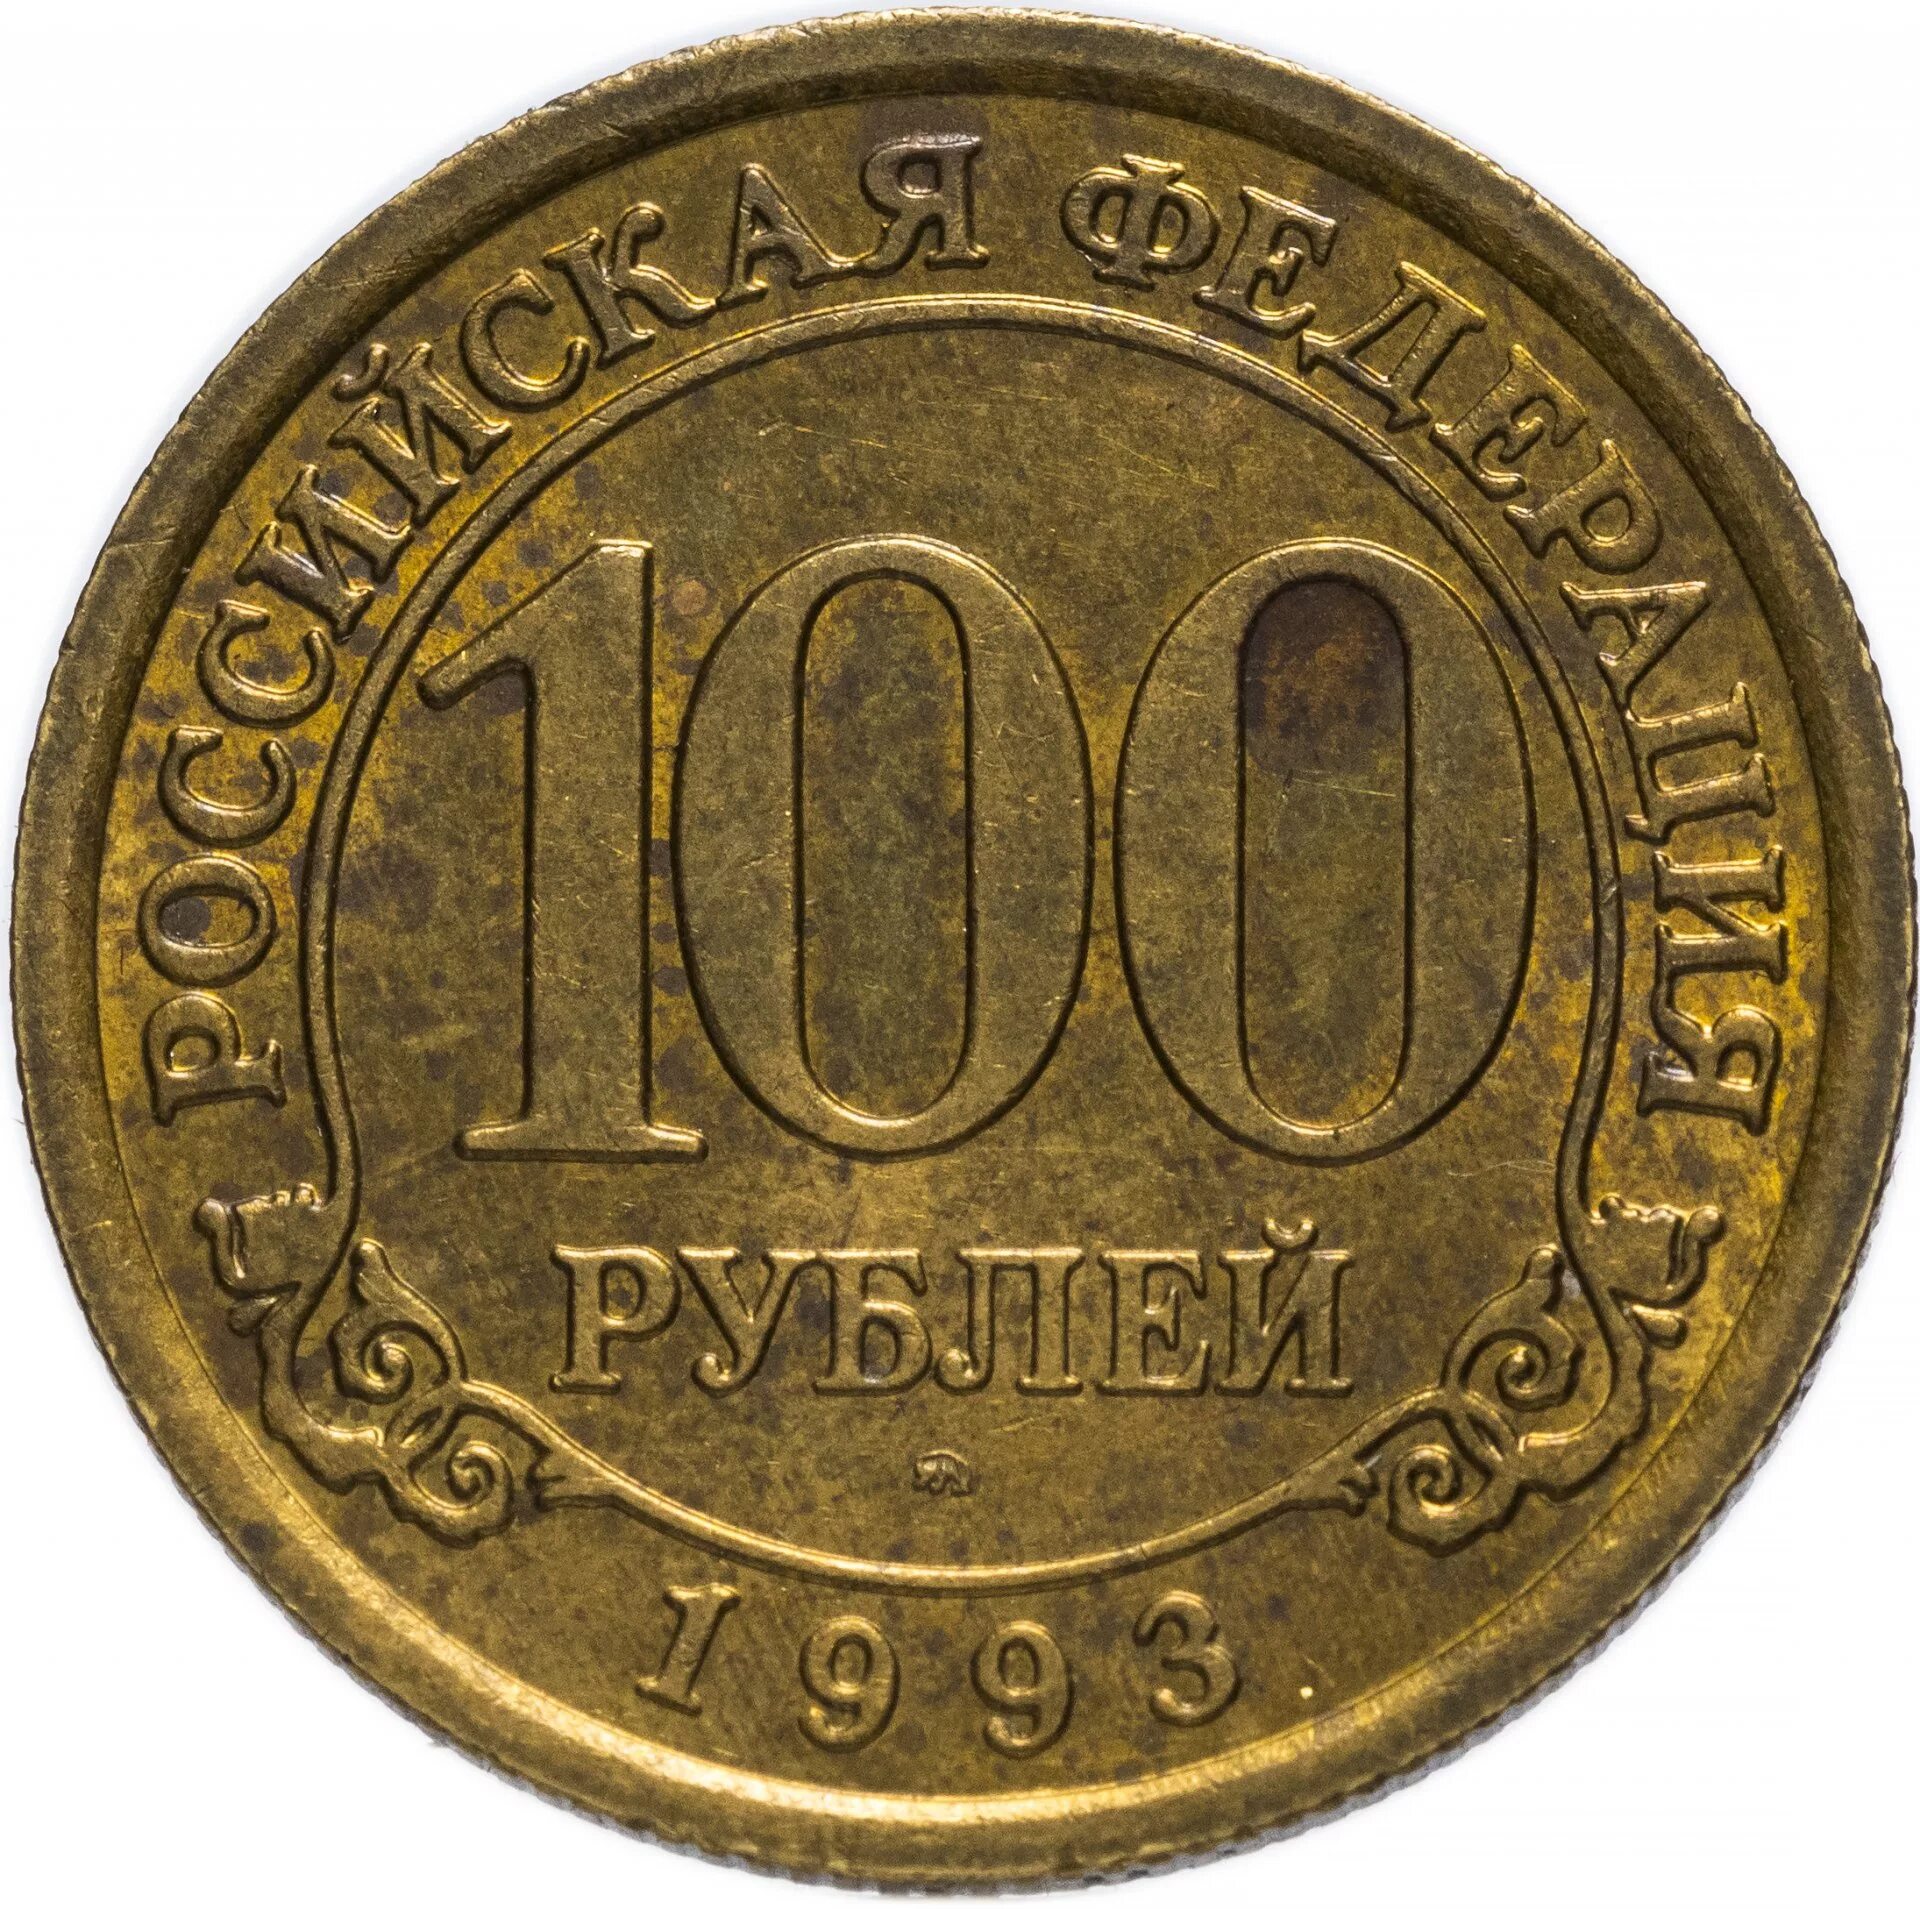 Сколько стоят монеты 1993 года цена. 100 Рублей 1993 ММД. Монета СТО рублей 1993. 100 Рублей 1993 года. Монета 100 руб 1993.